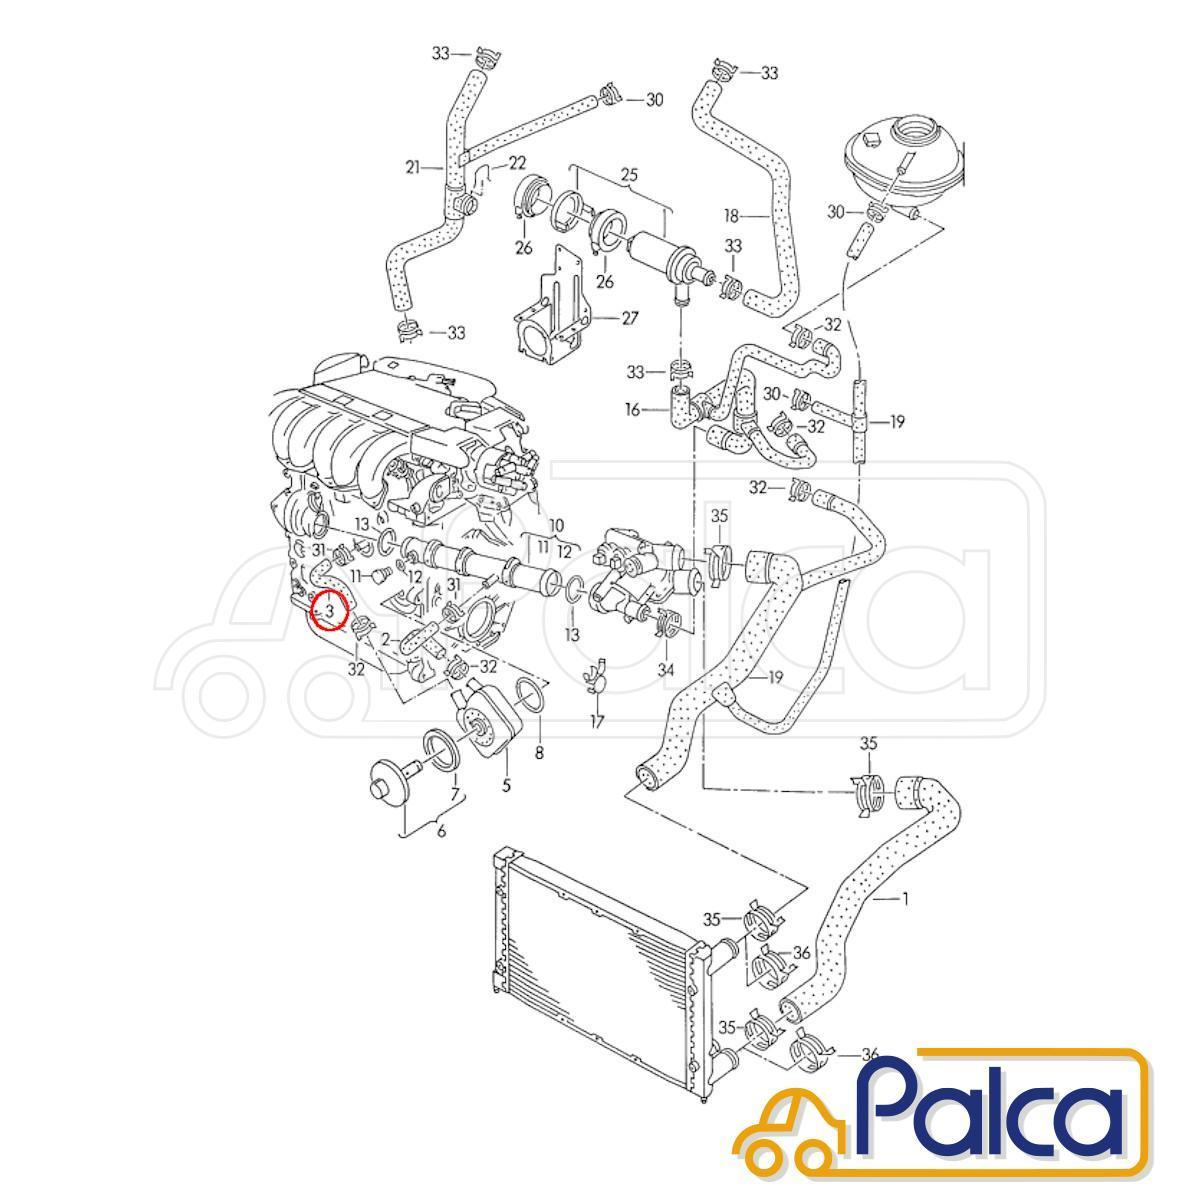 VW вода шланг / кондиционер шланг маслоохладитель ~ двигатель Corrado /50ABV | Golf 3, Vent /1HAAA | Passat /3AAAA | MEYLE производства 